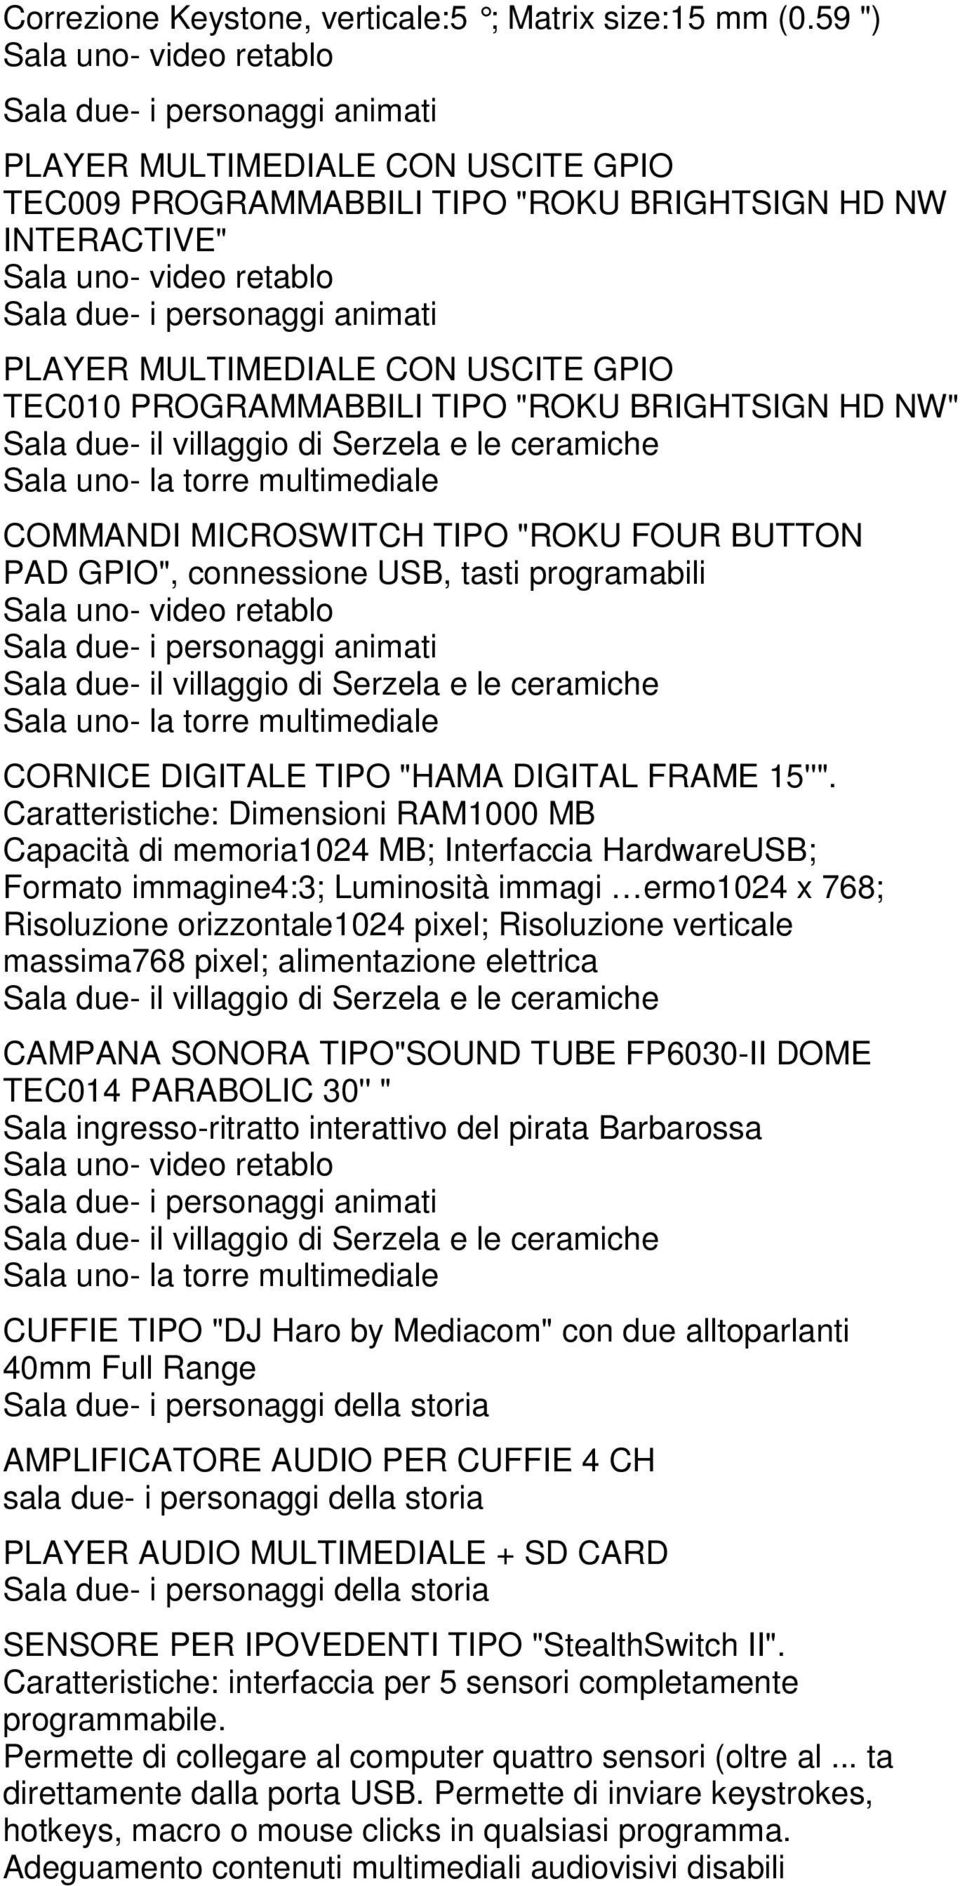 COMMANDI MICROSWITCH TIPO "ROKU FOUR BUTTON PAD GPIO", connessione USB, tasti programabili CORNICE DIGITALE TIPO "HAMA DIGITAL FRAME 15''".